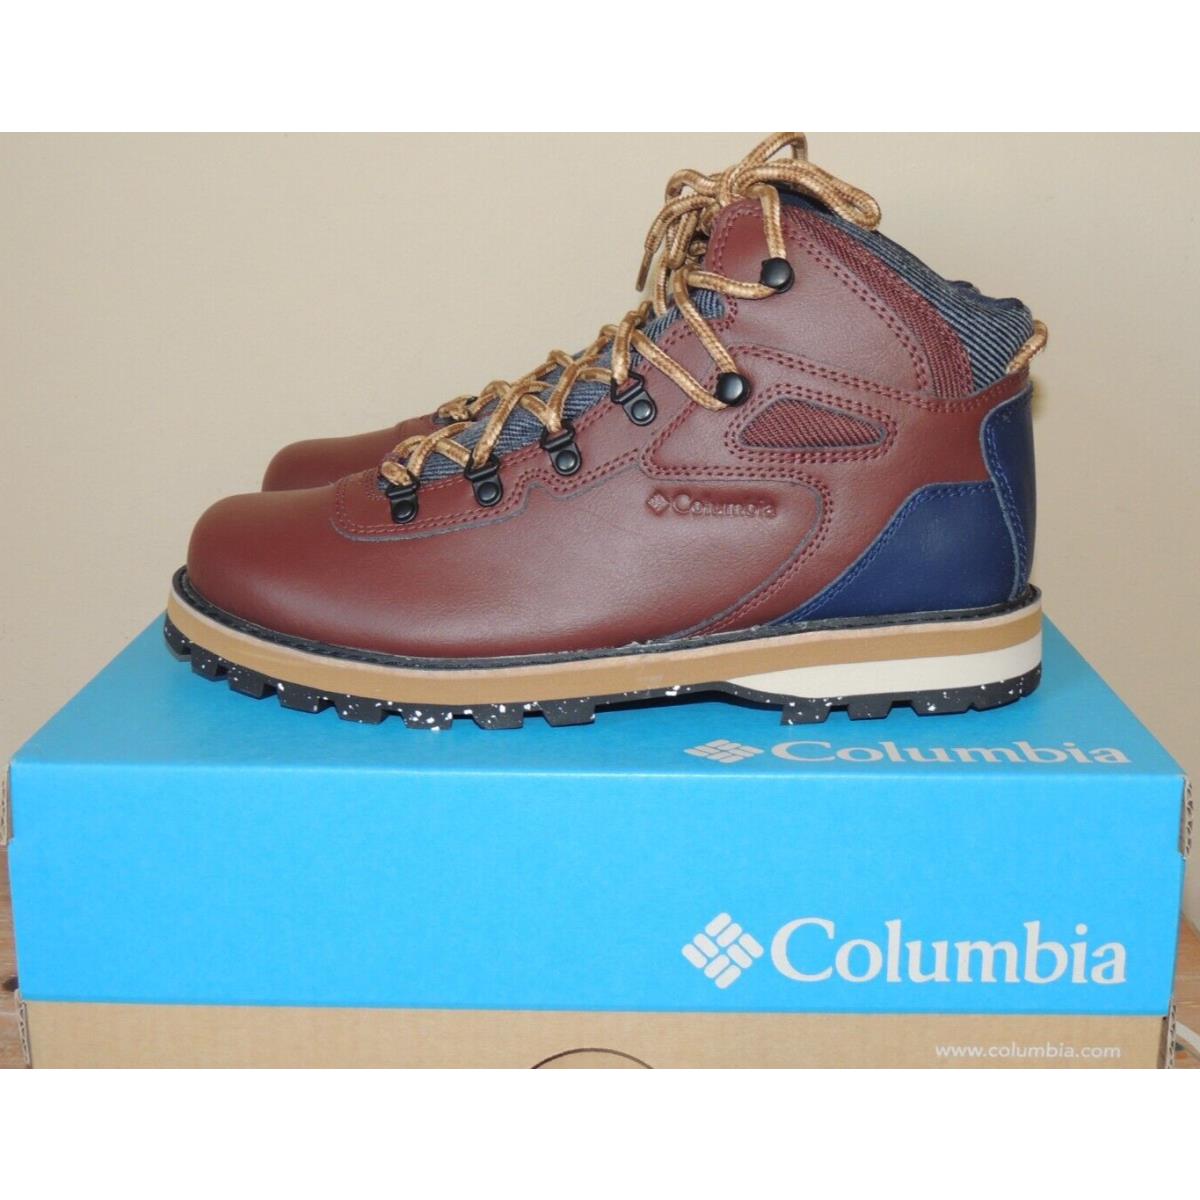 Mens Columbia Big Ridge Waterproof Madder Brown Hiking Boots Shoes Size 9.5